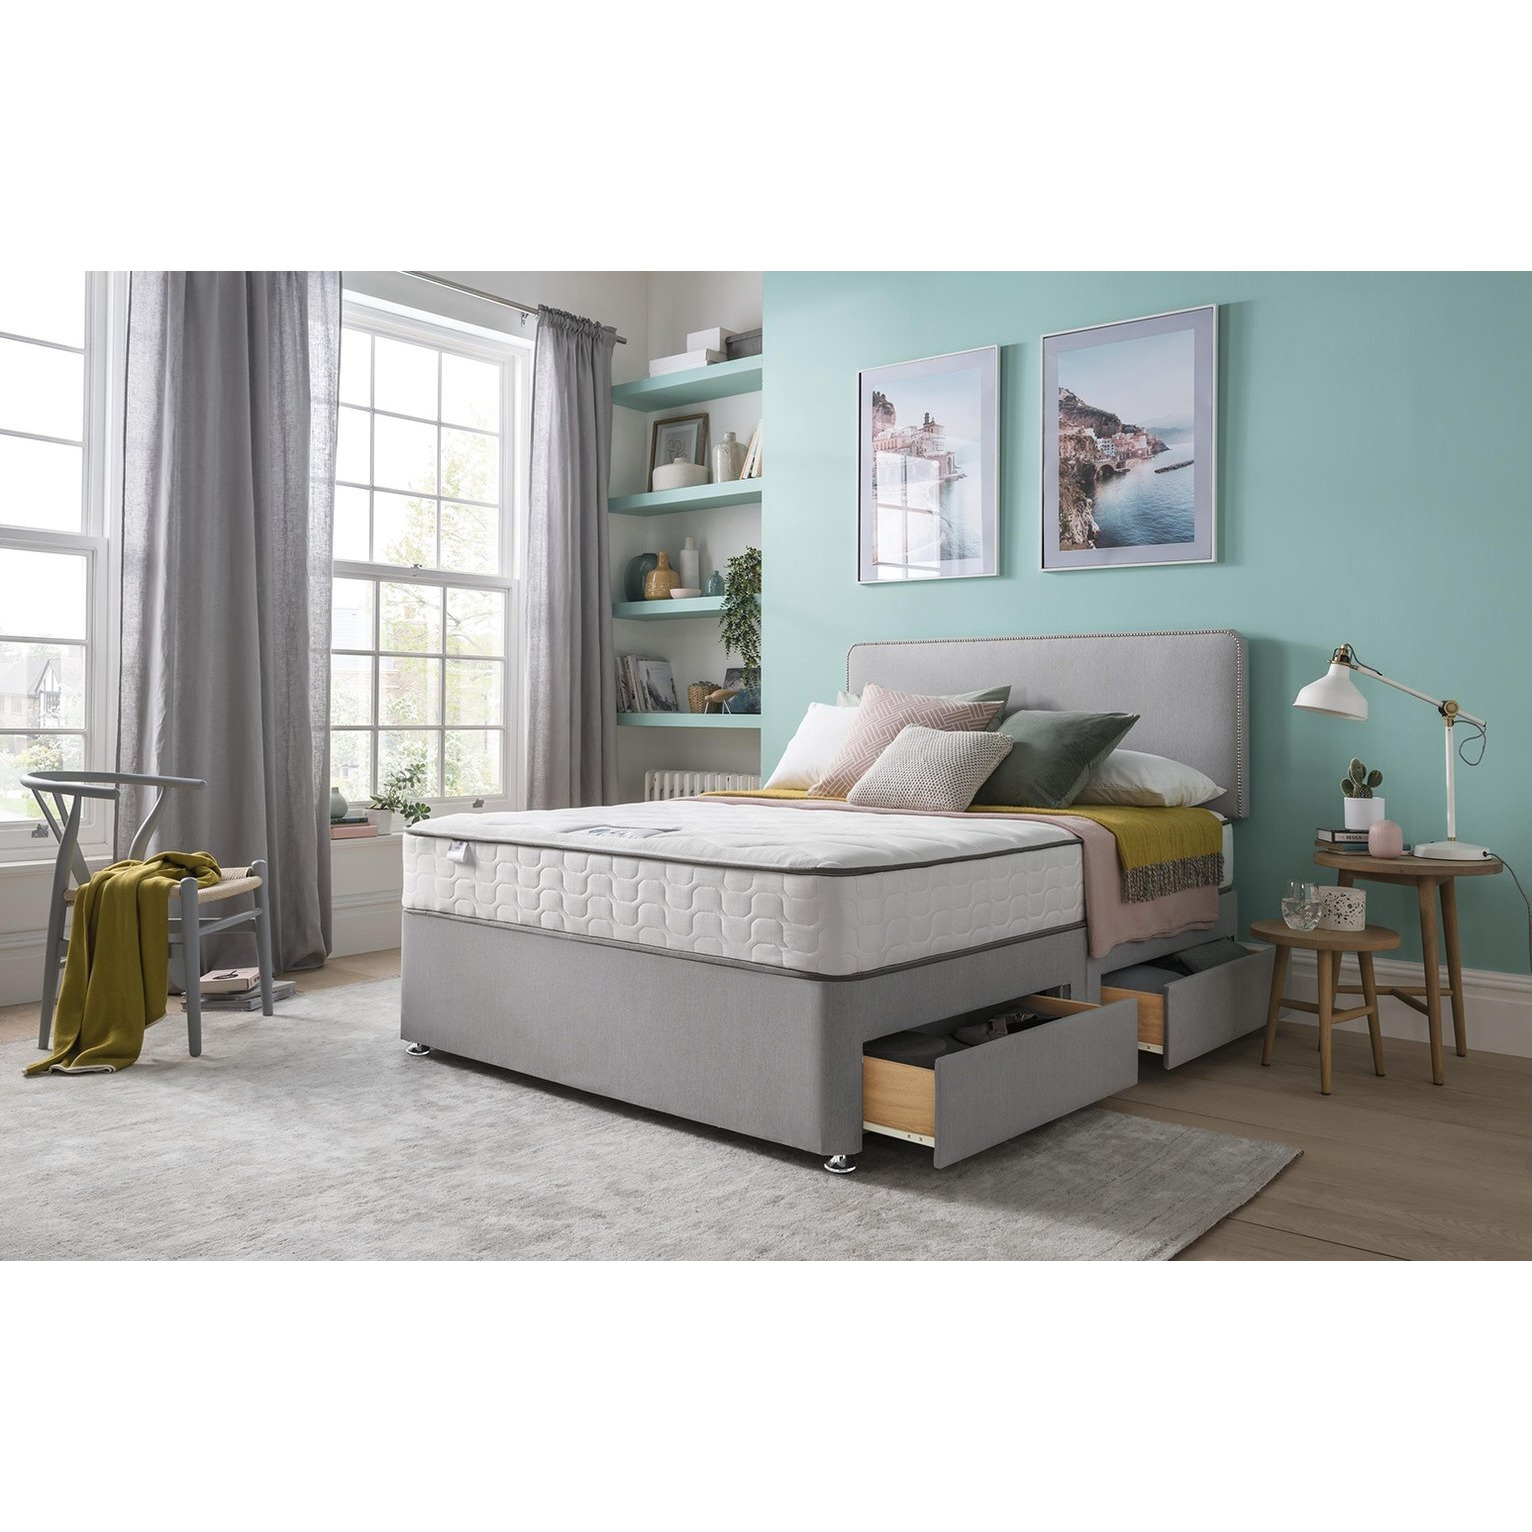 Silentnight Comfort Small Double 2 Drawer Divan Bed - Grey